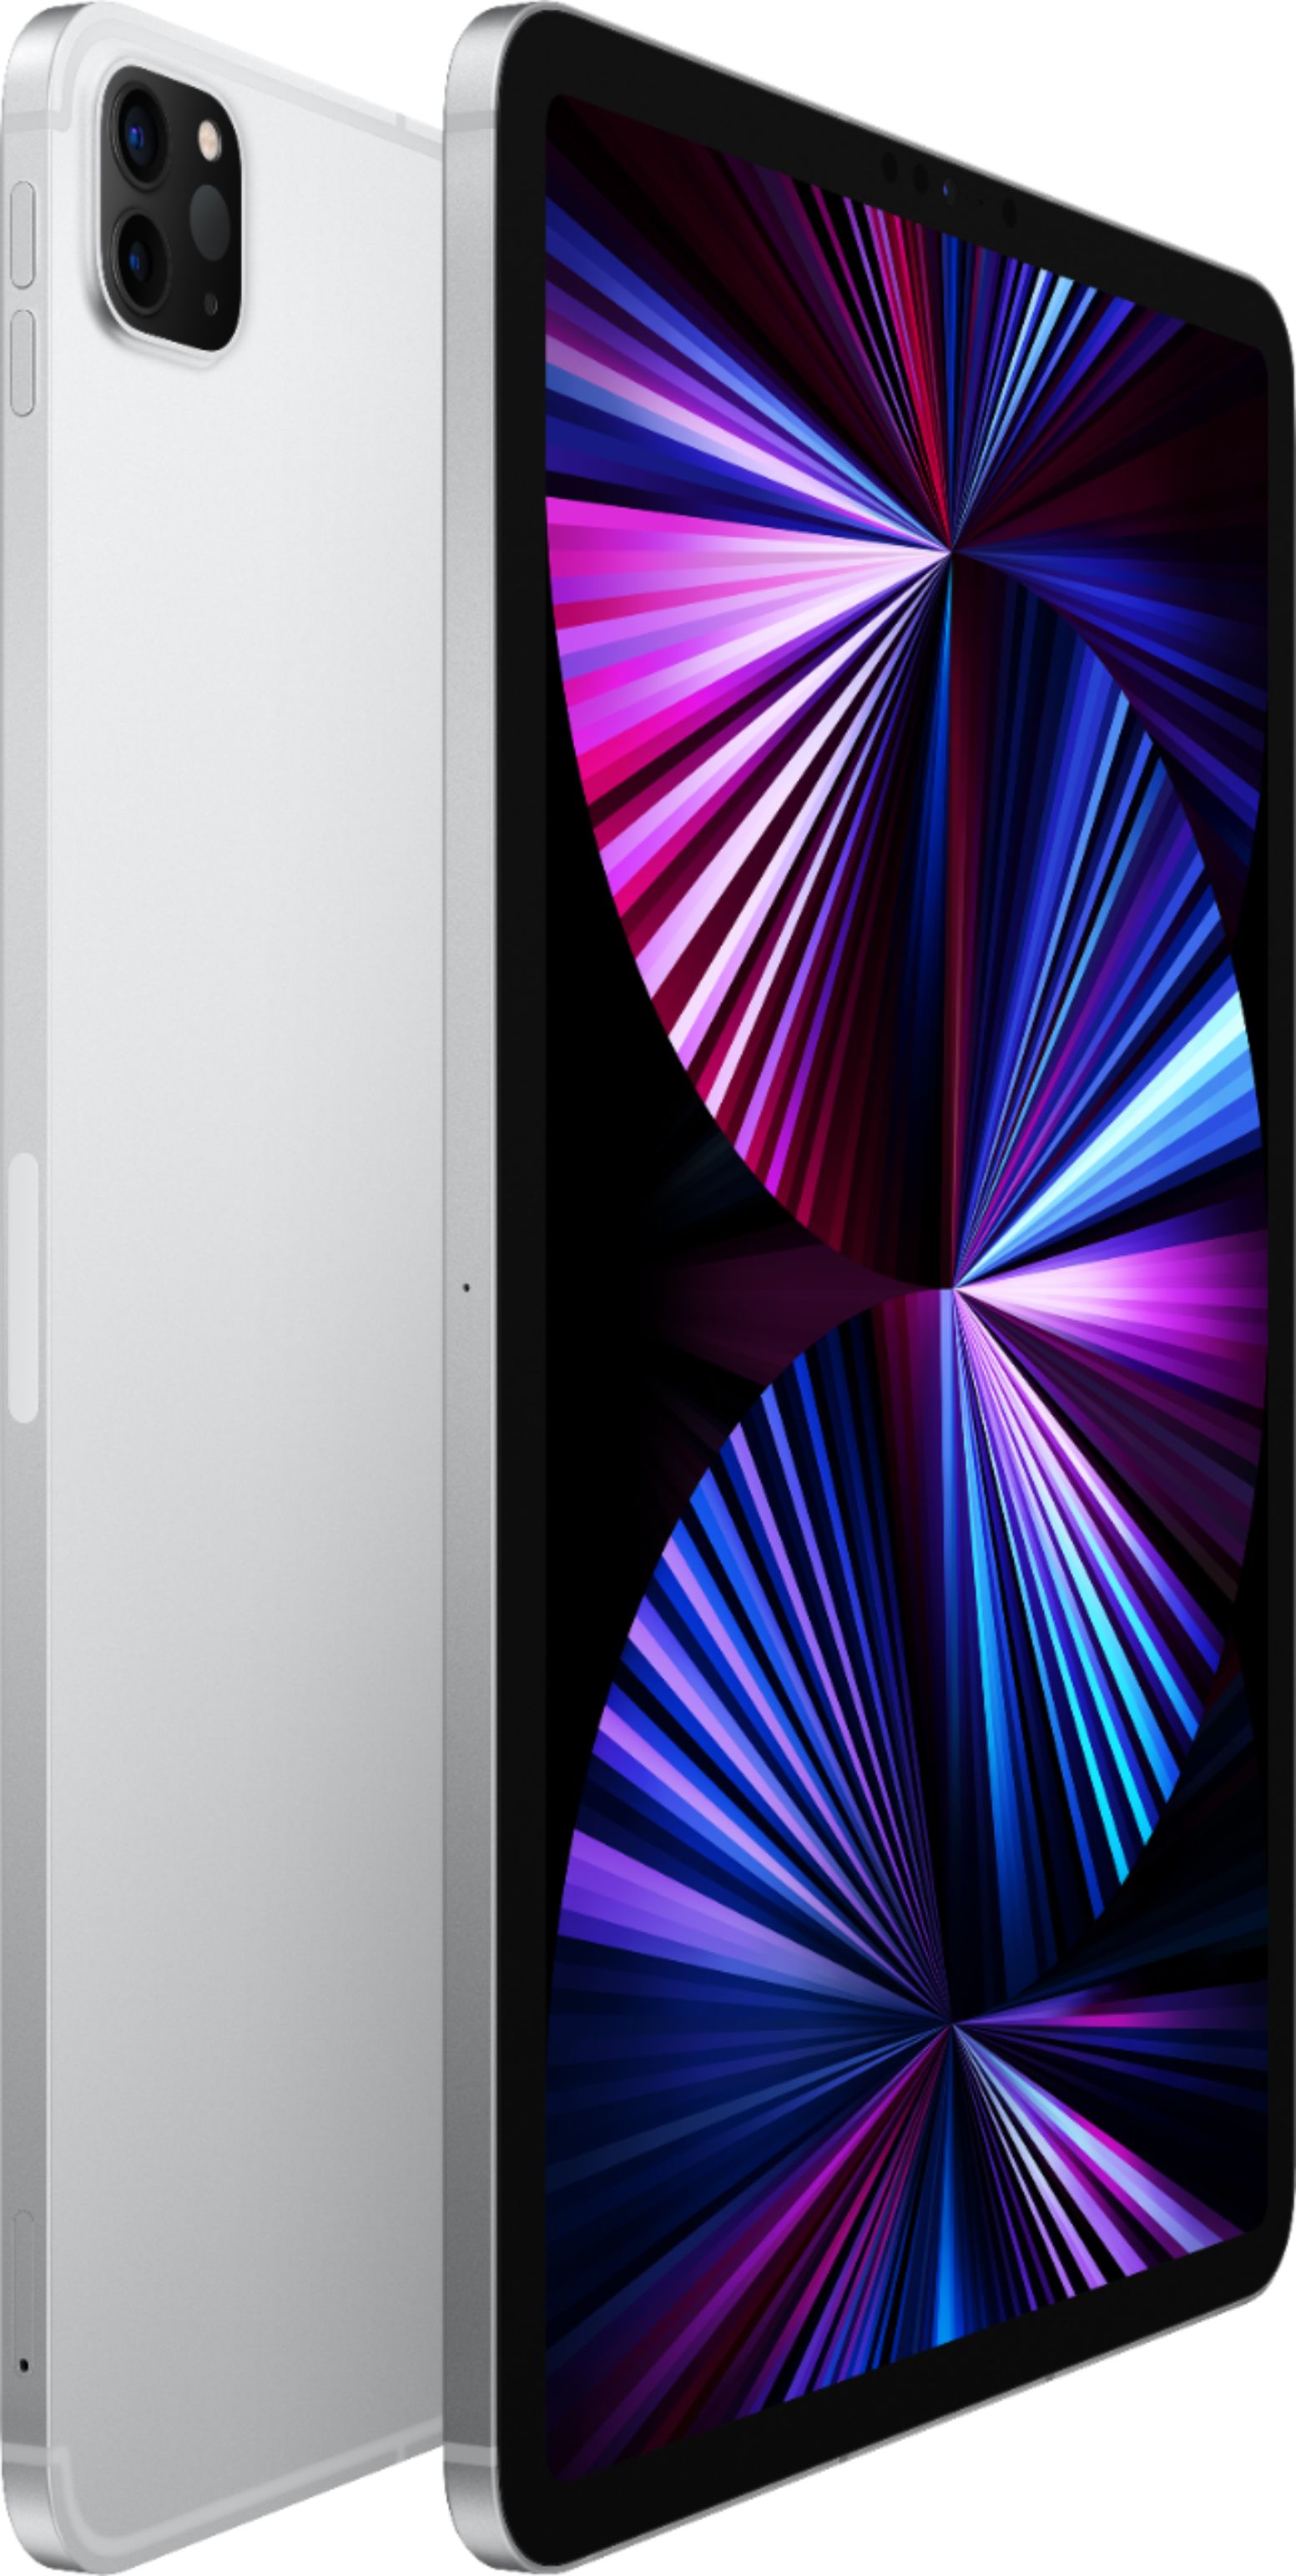 Apple - 11-Inch iPad Pro (Latest Model) with Wi-Fi + Cellular - 1TB (Unlocked) - Silver